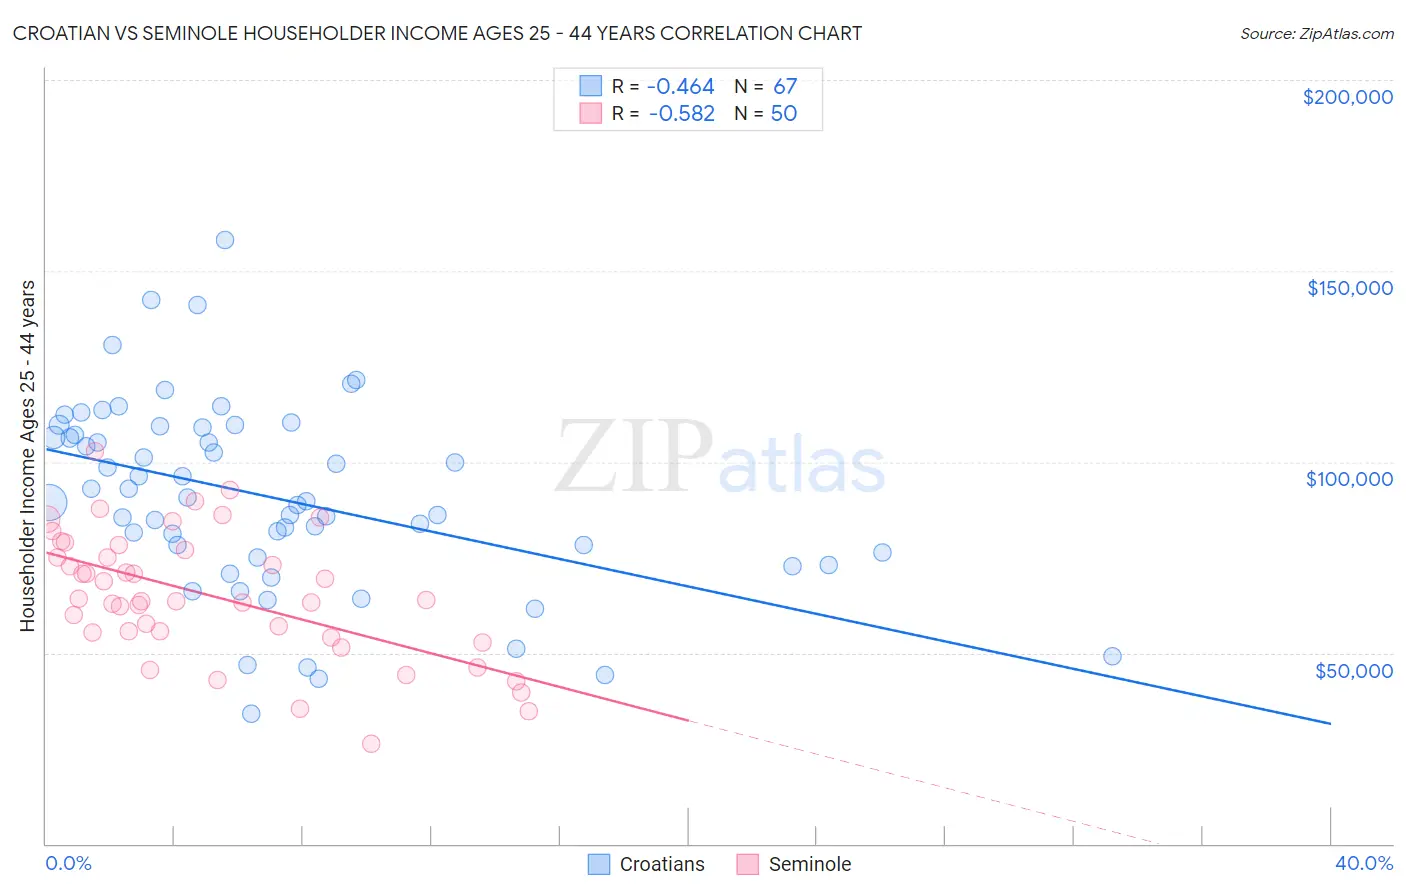 Croatian vs Seminole Householder Income Ages 25 - 44 years